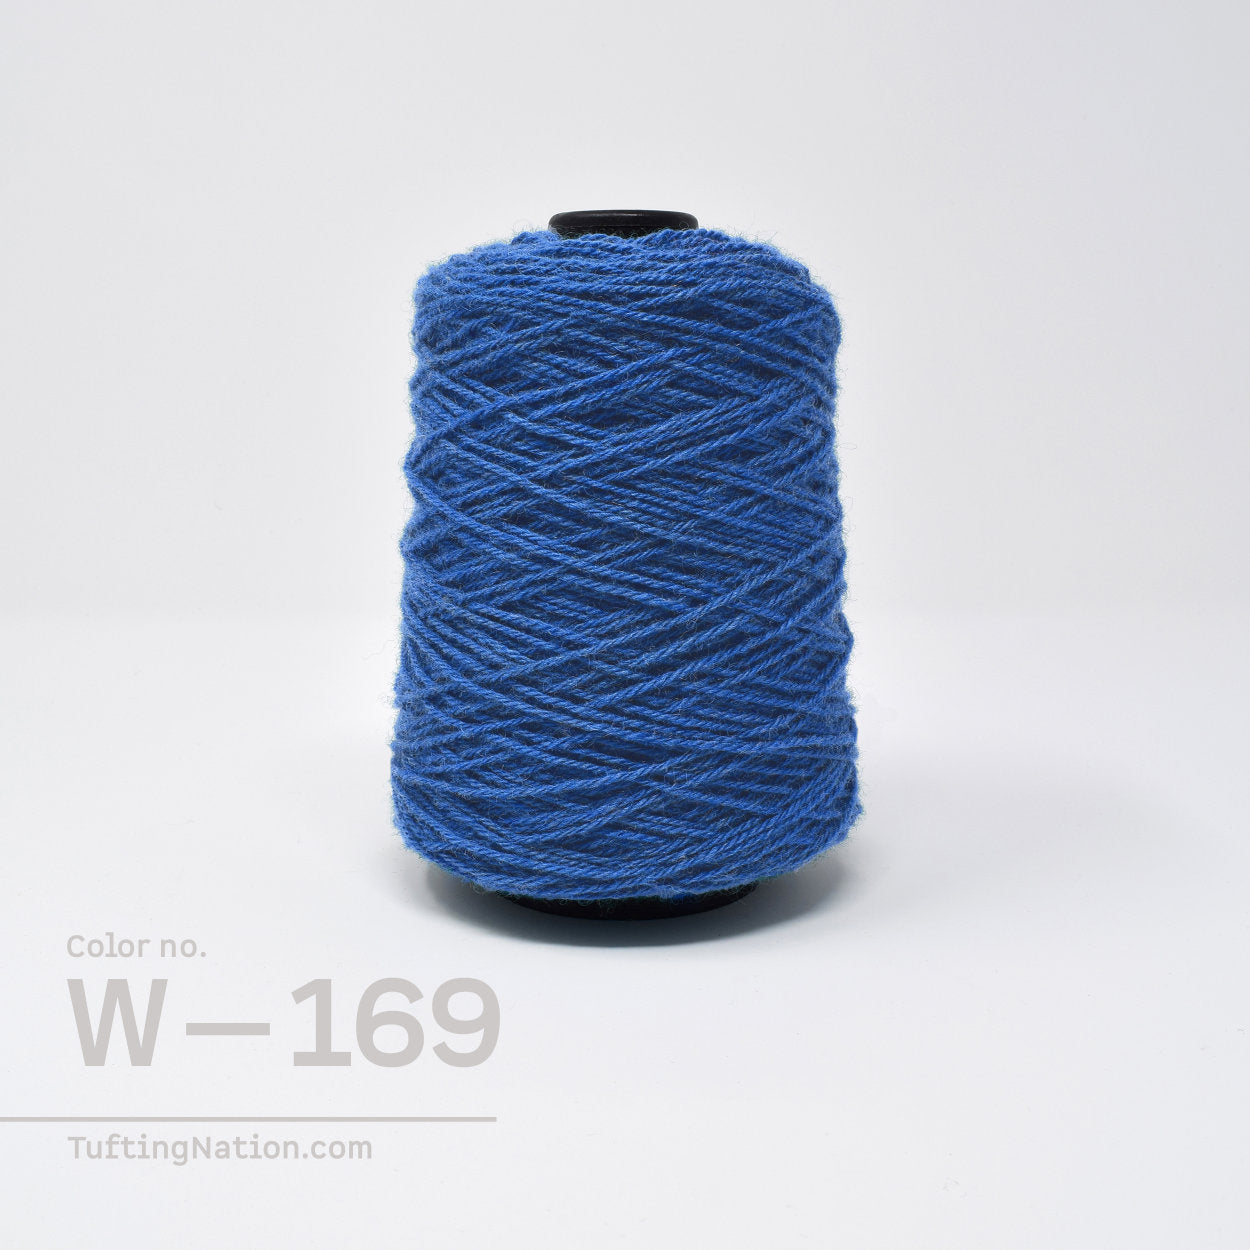 Blue Tufting Gun Yarn on Spool for Rug Tufting and Rug Weaving | TuftingNation